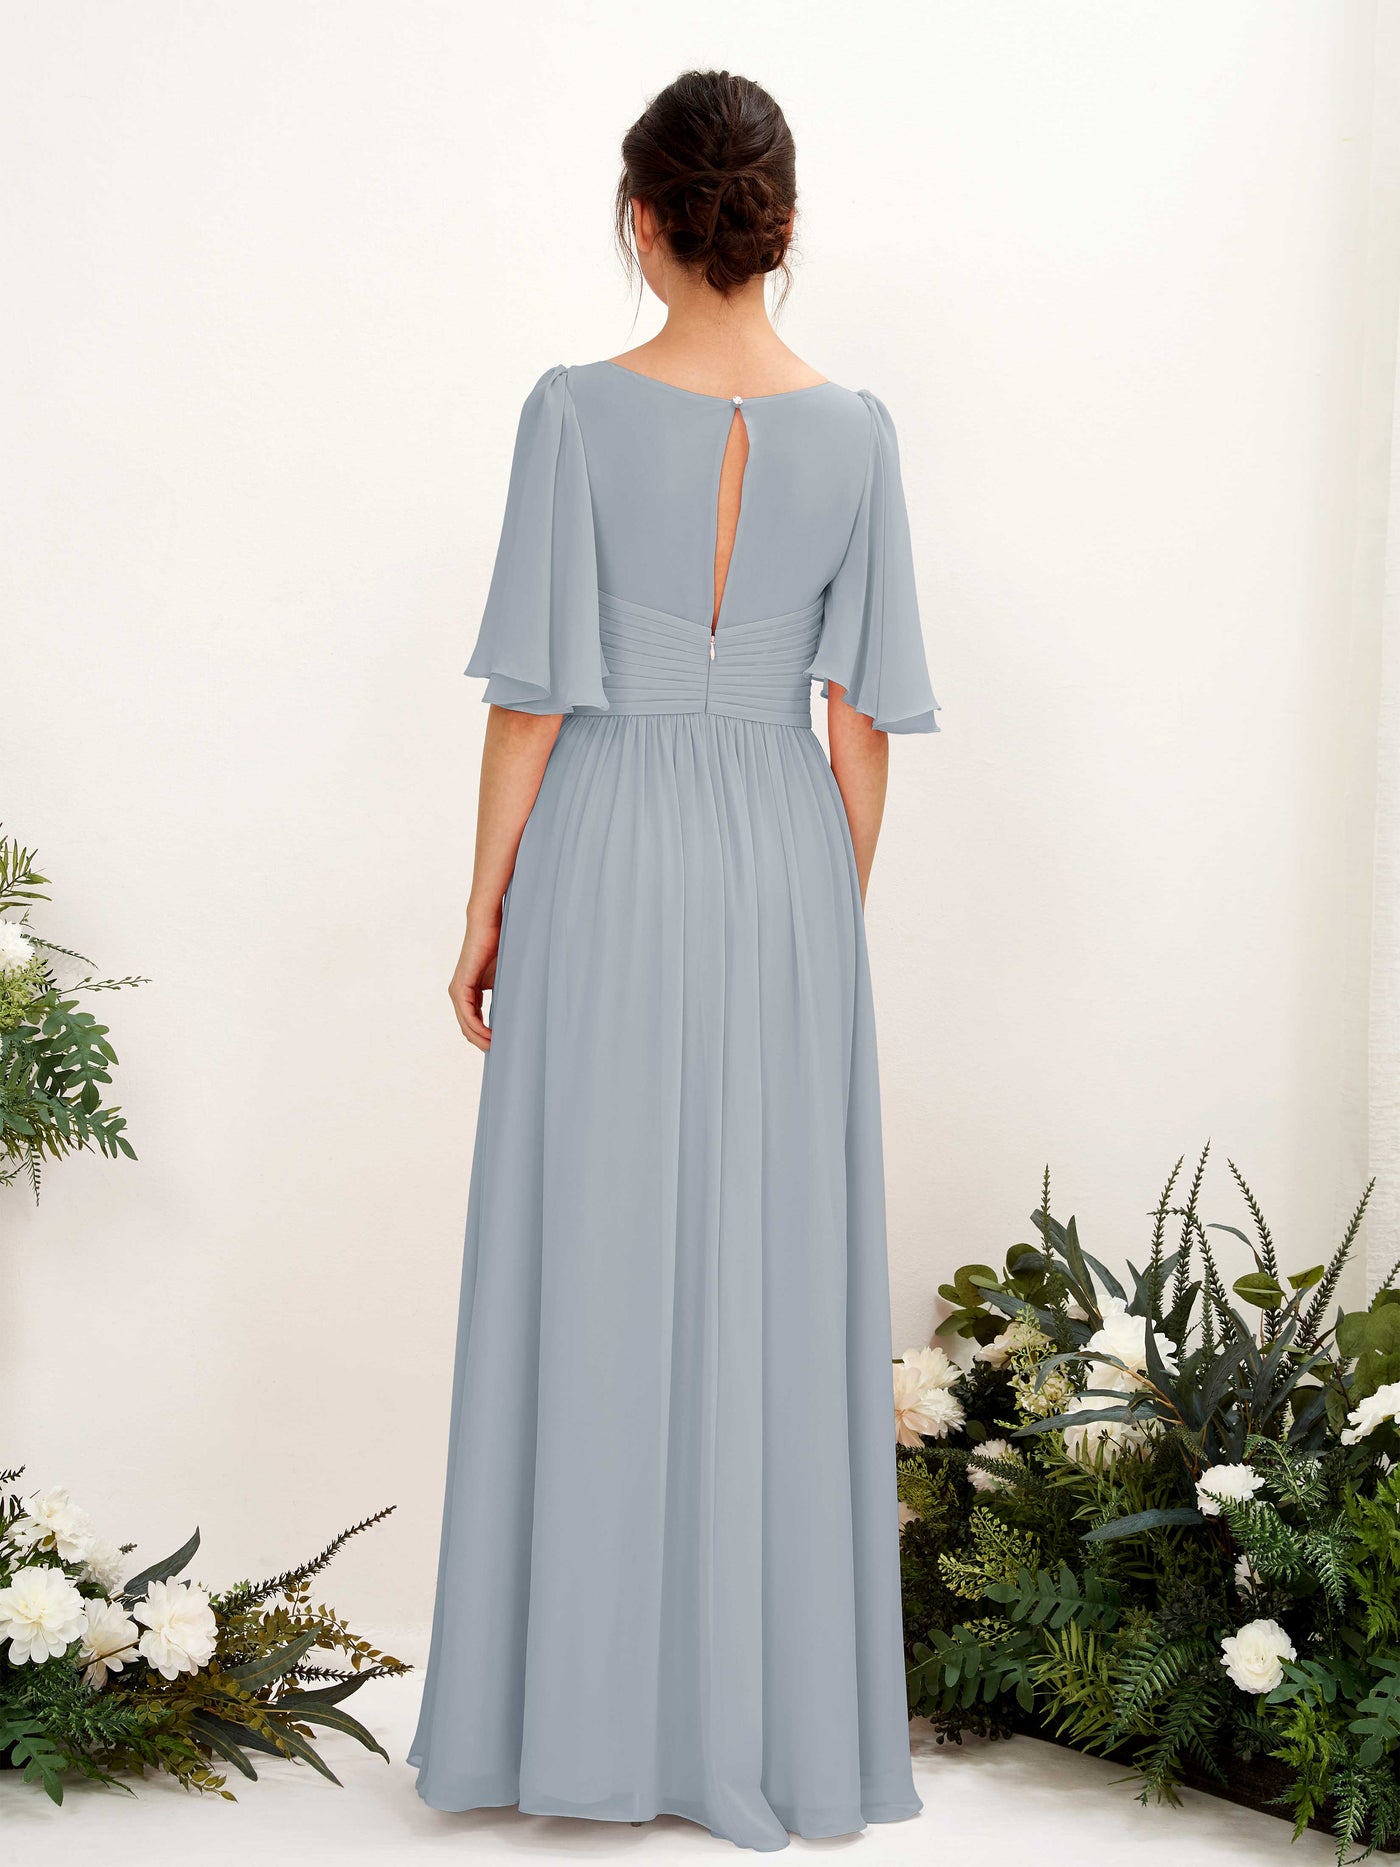 Dusty Blue-Upgrade Bridesmaid Dresses Bridesmaid Dress A-line Chiffon V-neck Full Length 1/2 Sleeves Wedding Party Dress (81221604)#color_dusty-blue-upgrade